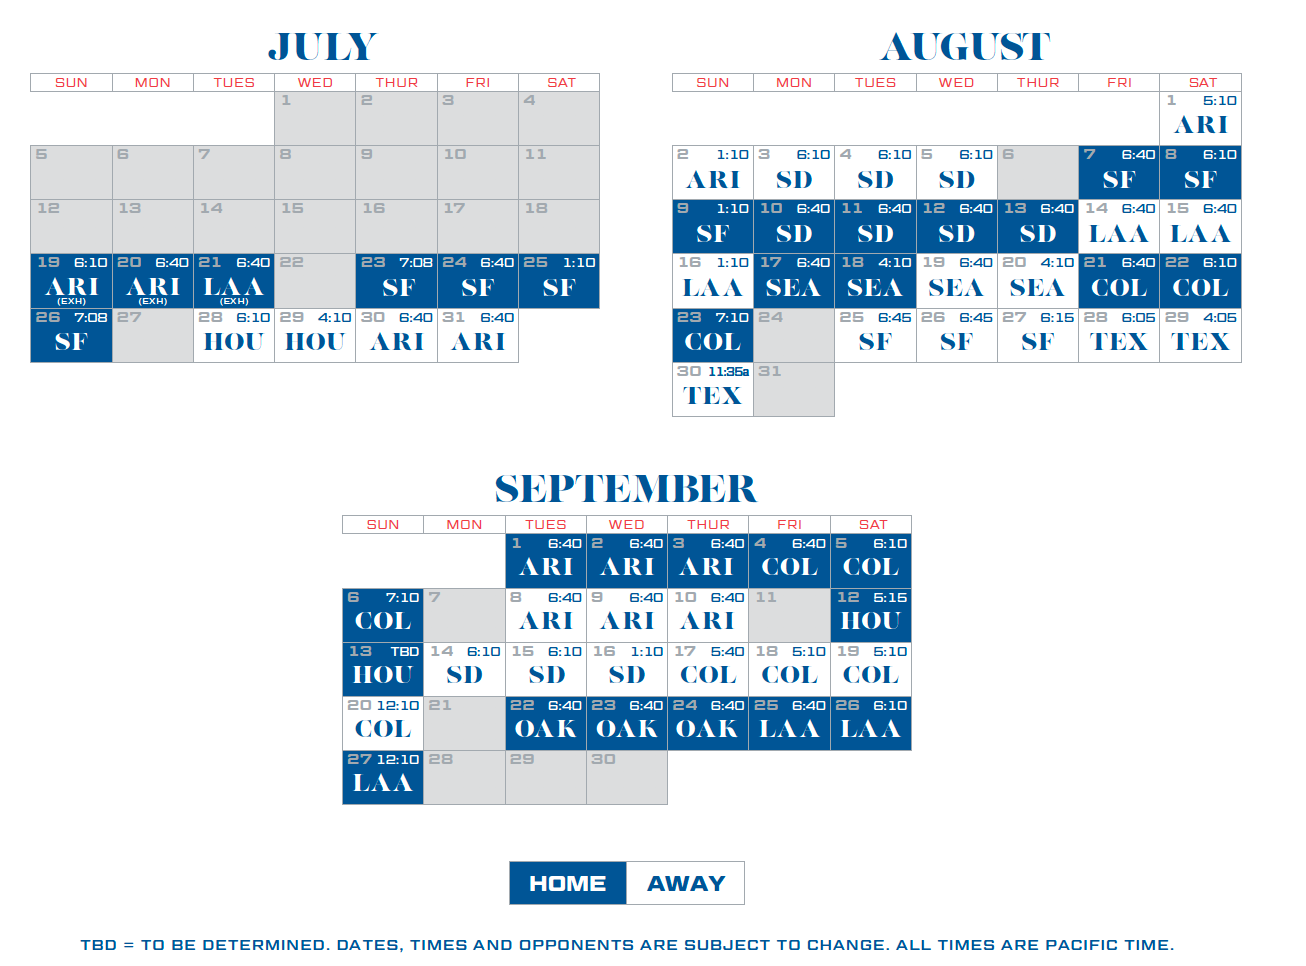 Dodgers announce 2020 schedule. Dodgers' 60 game schedule begins July…, by  Rowan Kavner